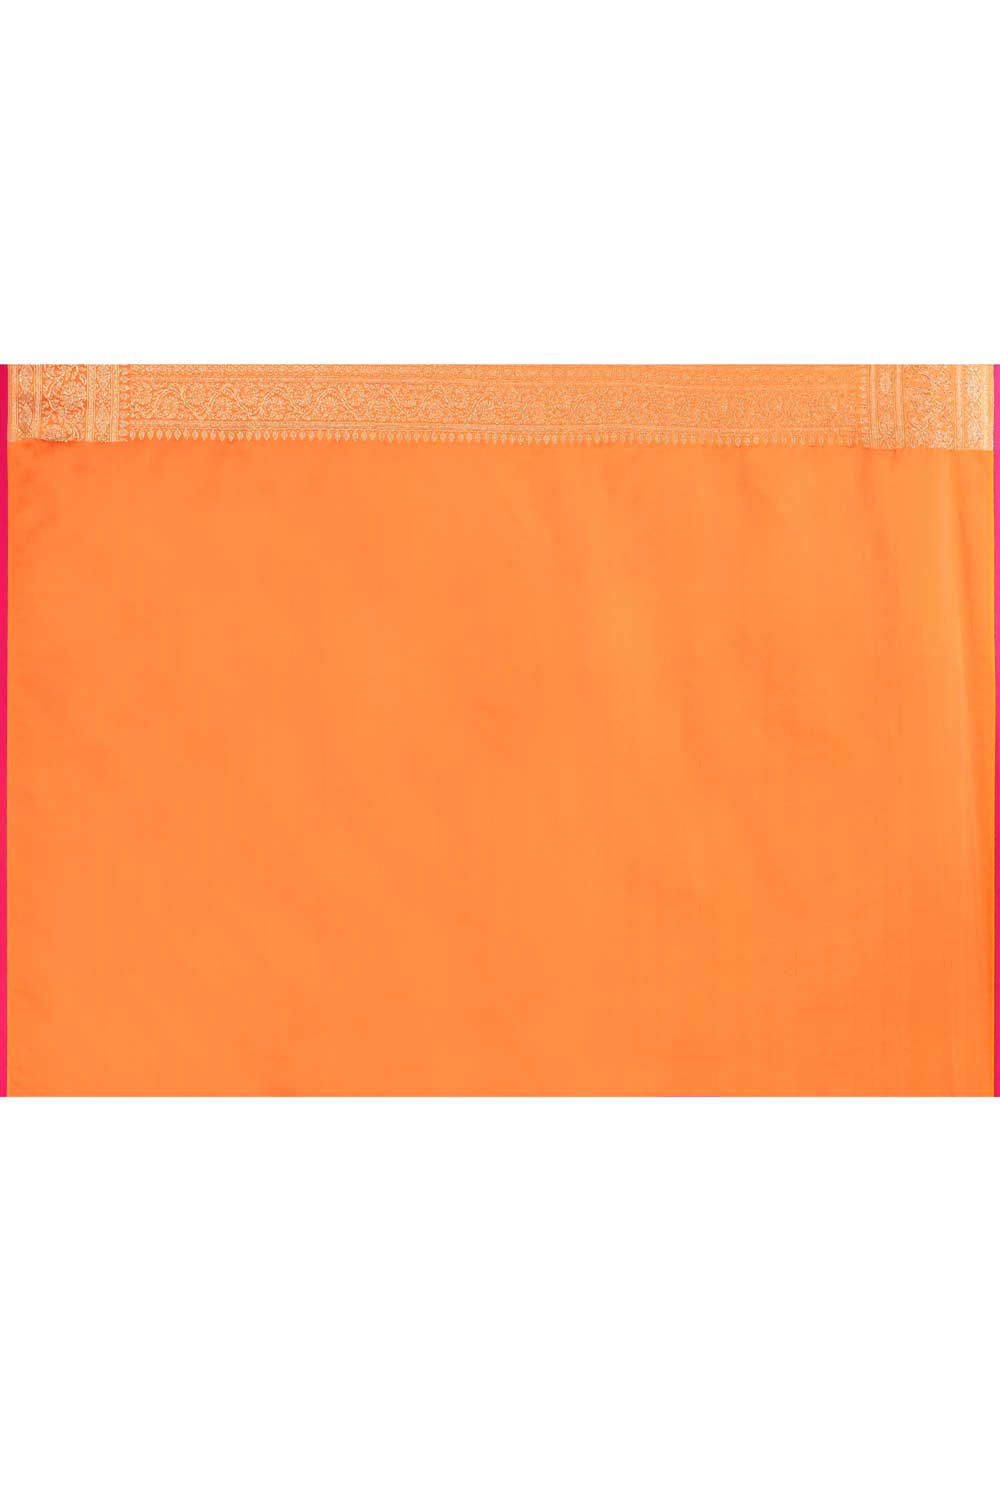 Orange Banarasi Handloom Saree With contemporary adda stripe pattern Design